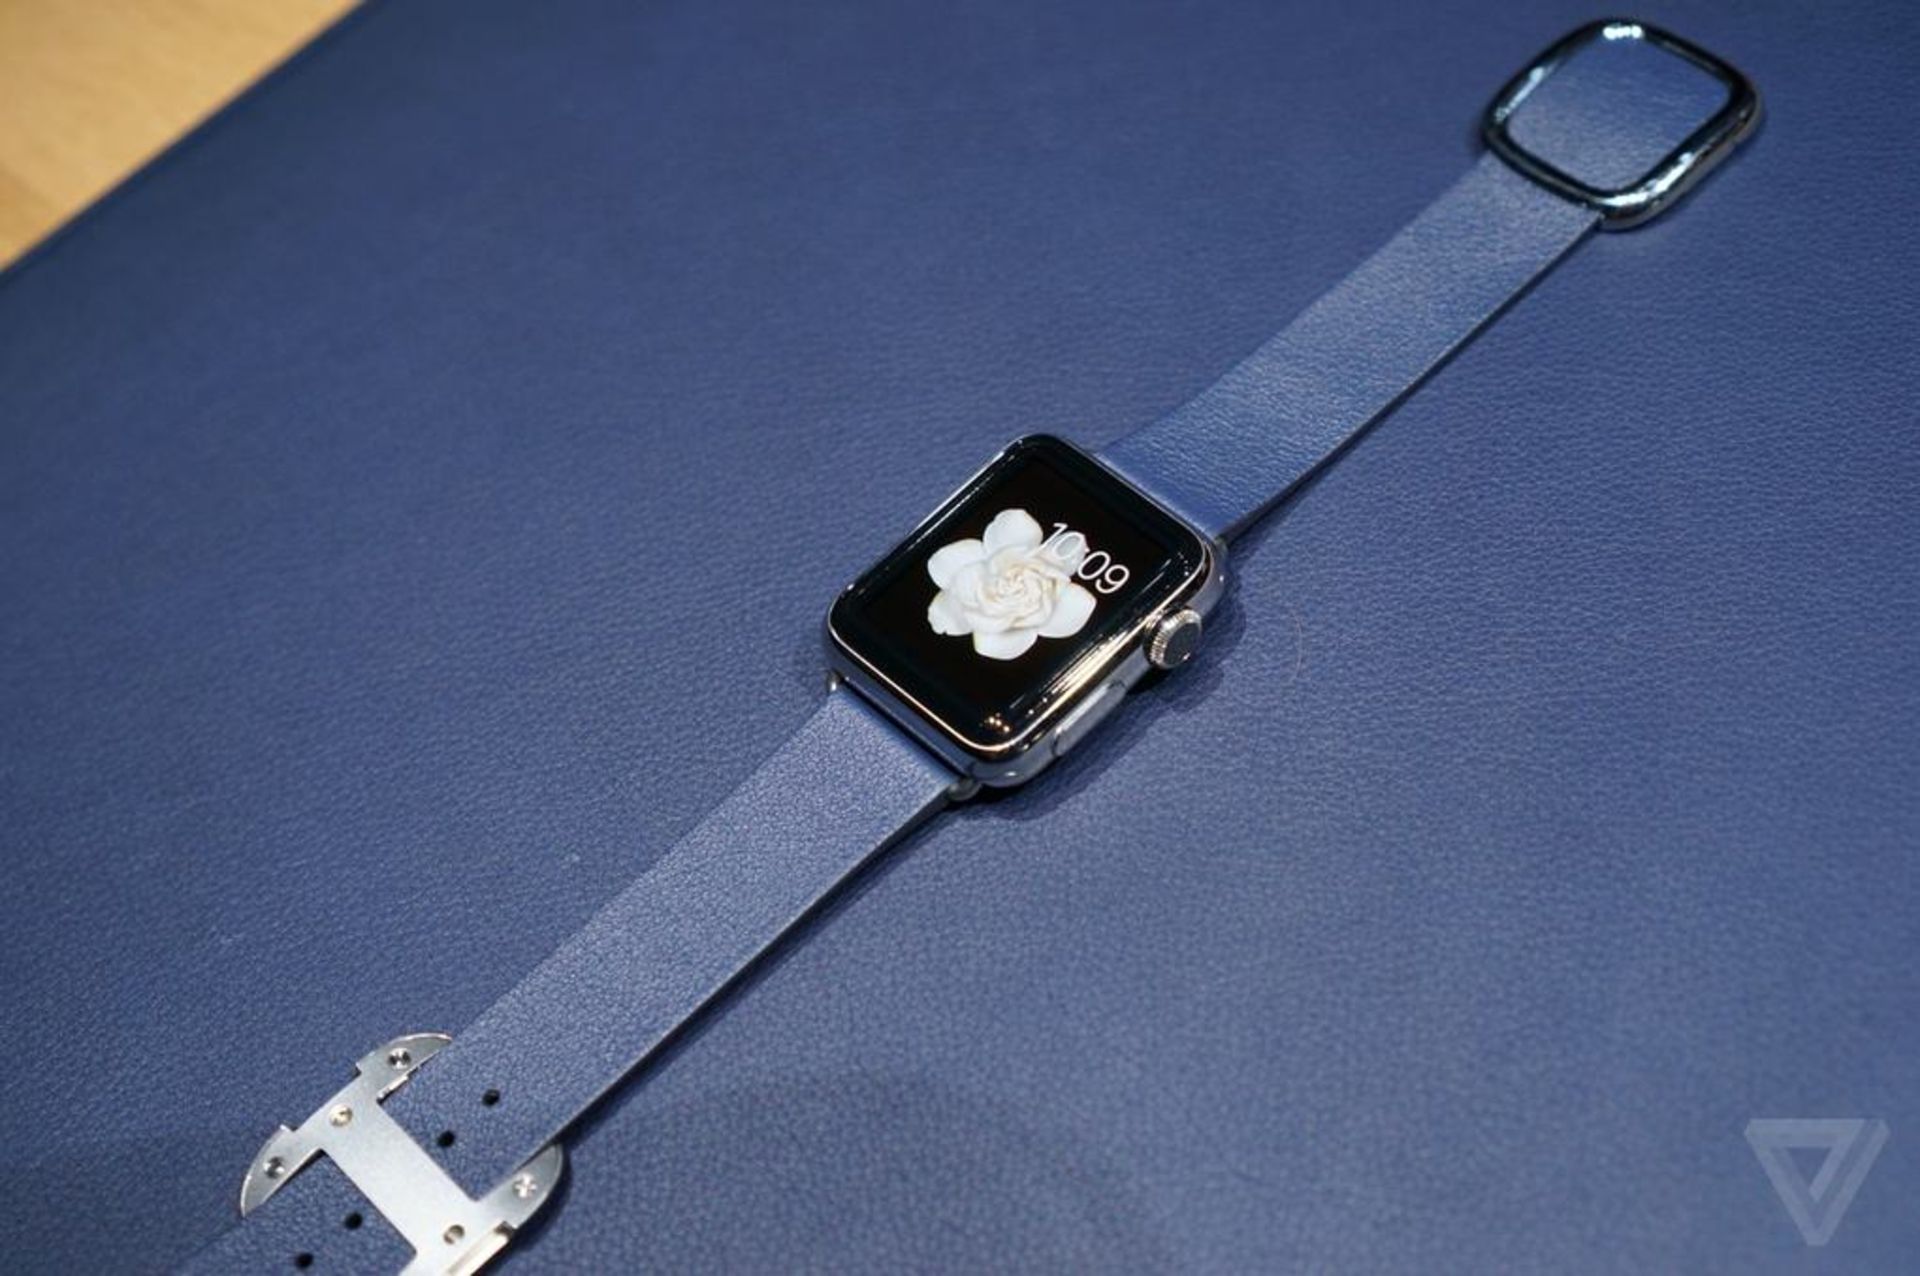 apple-watch-theverge-8 1320 verge super wide